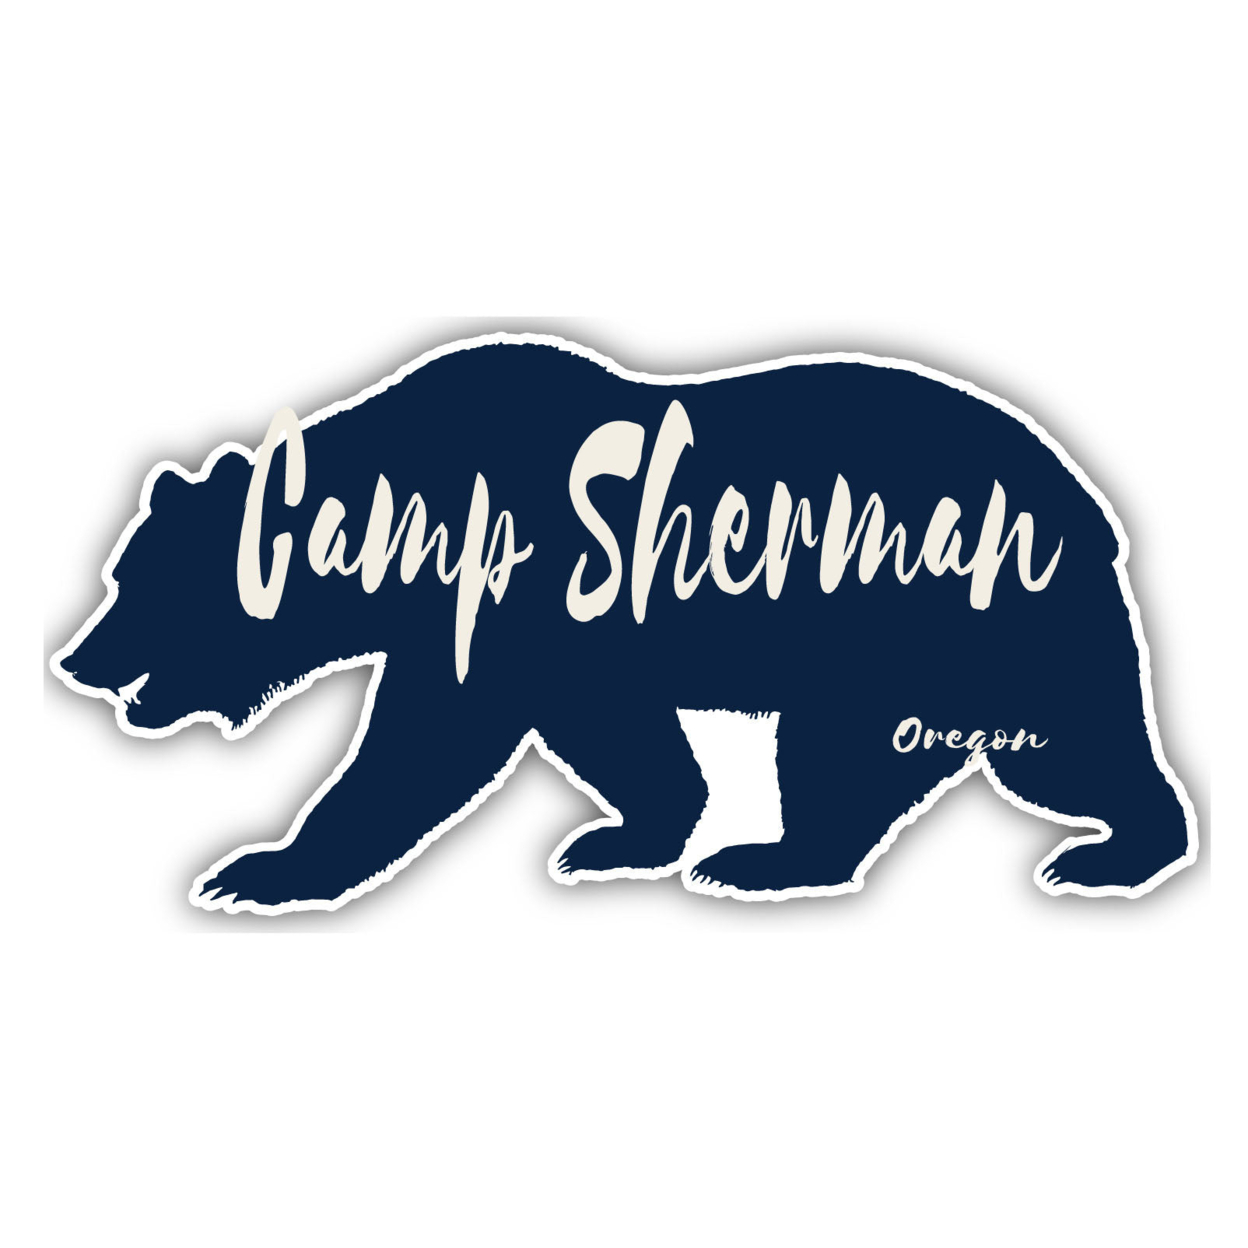 Camp Sherman Oregon Souvenir Decorative Stickers (Choose Theme And Size) - Single Unit, 6-Inch, Bear